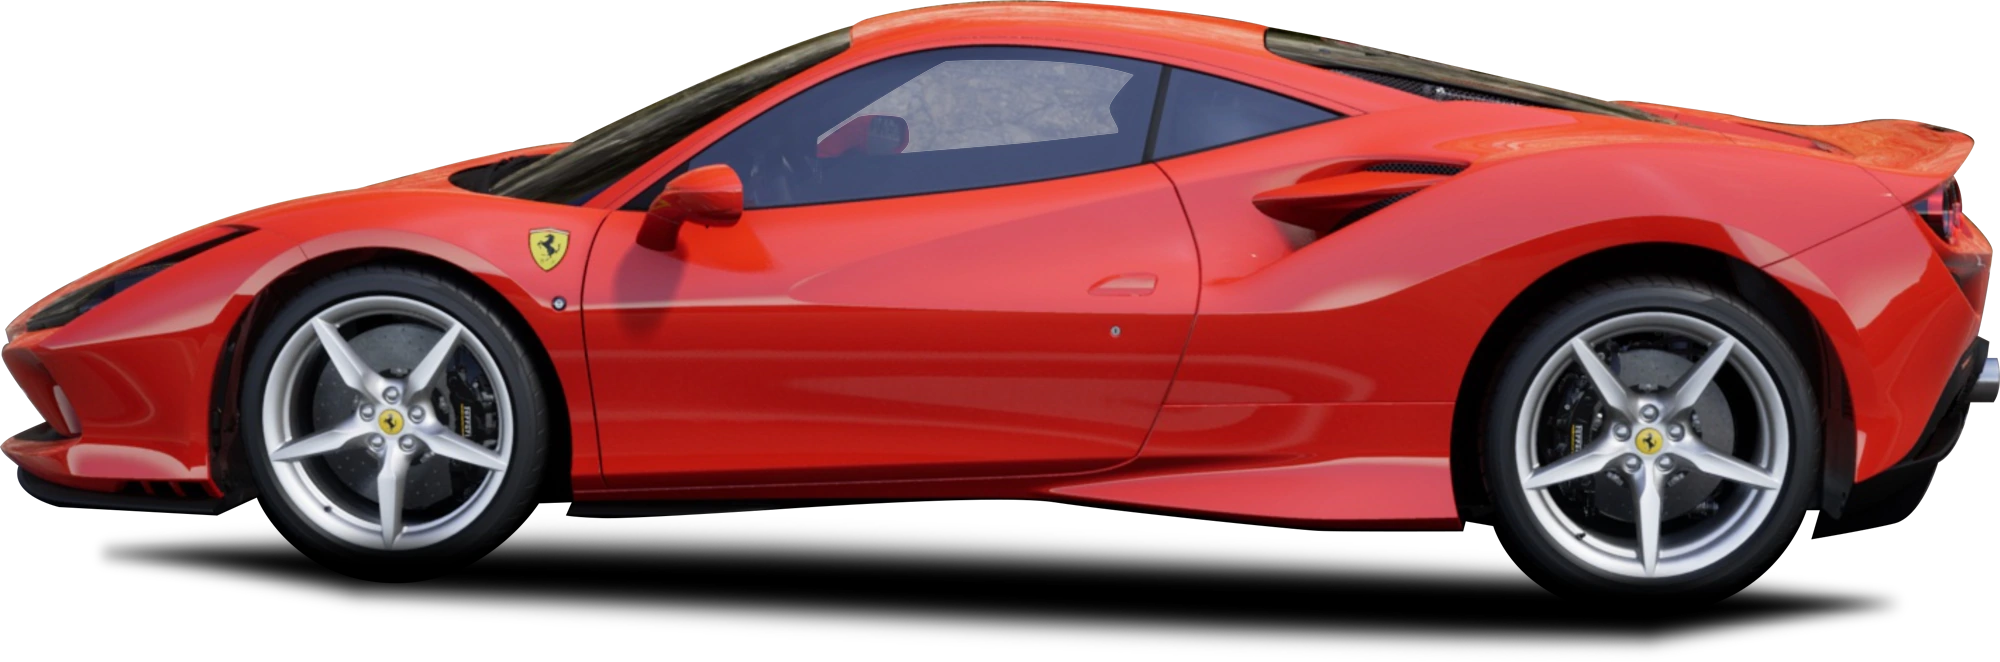 Ferrari F8 Tributo PNG imagen Transparente